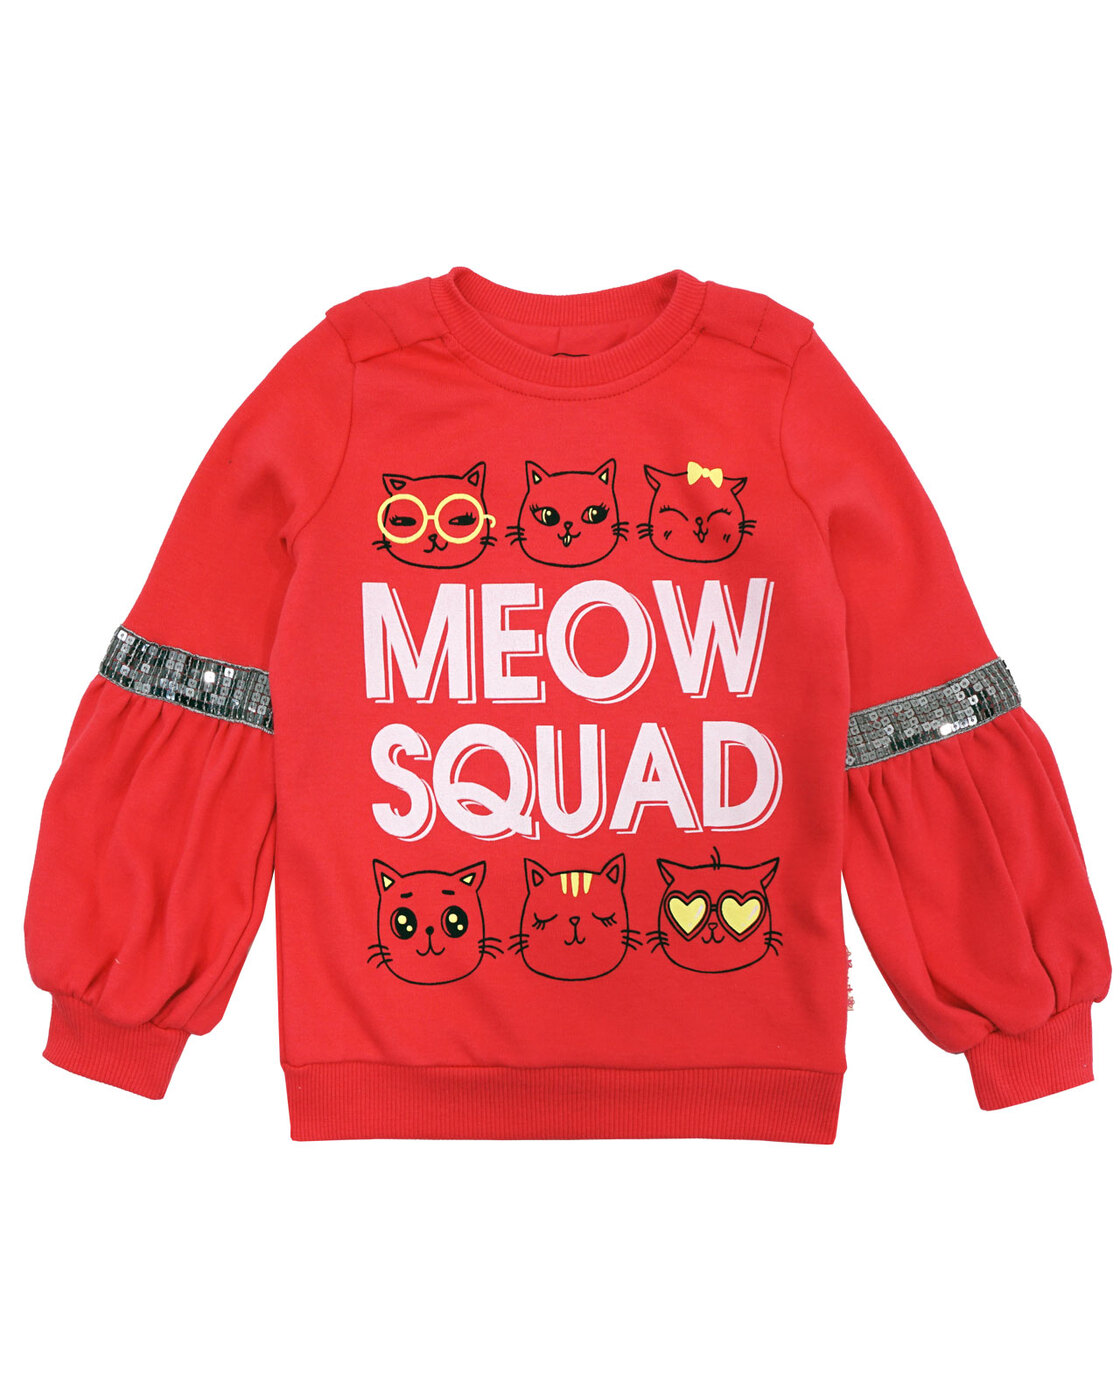 Meow Kids одежда. Толстовка Бонито 1147. Meow Squad. Meow Kids 24 коробка.